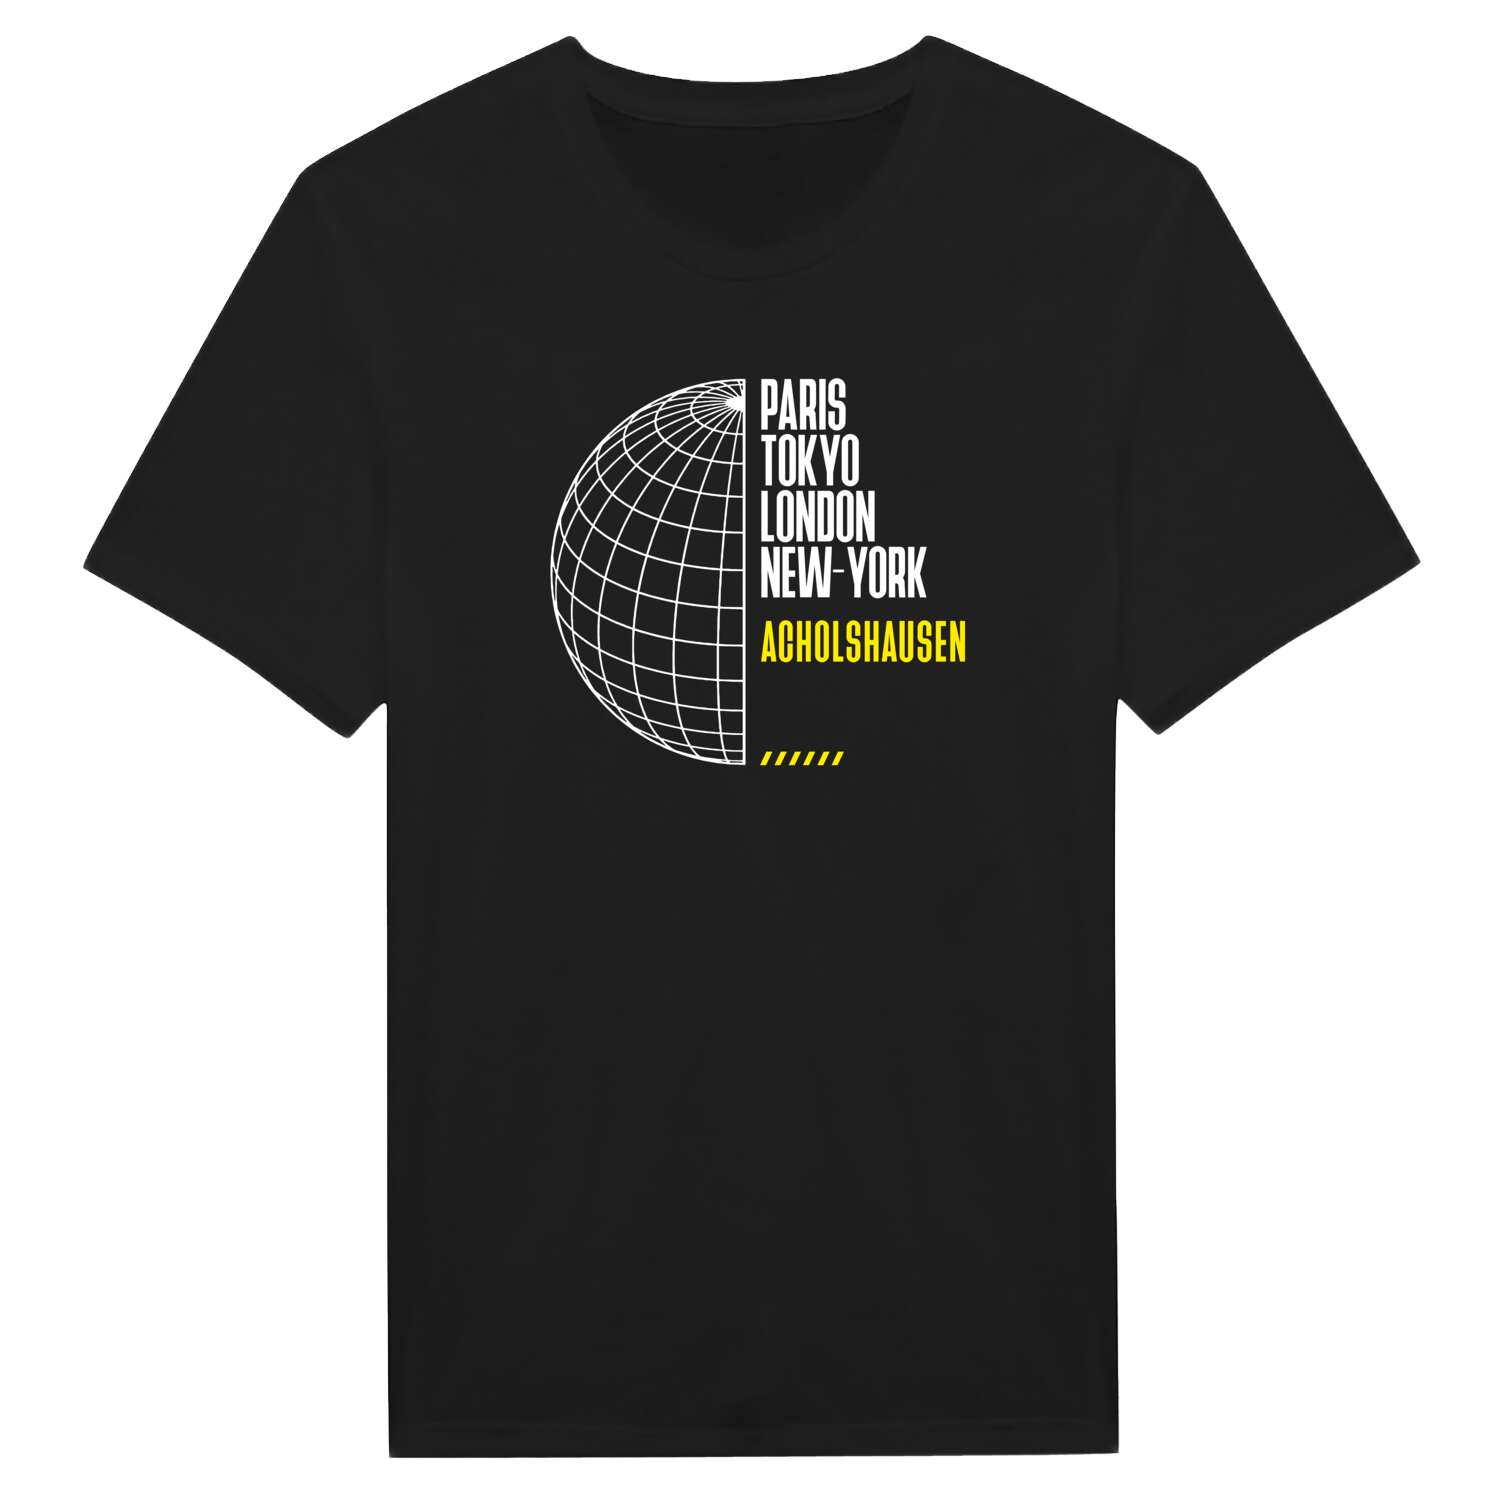 Acholshausen T-Shirt »Paris Tokyo London«